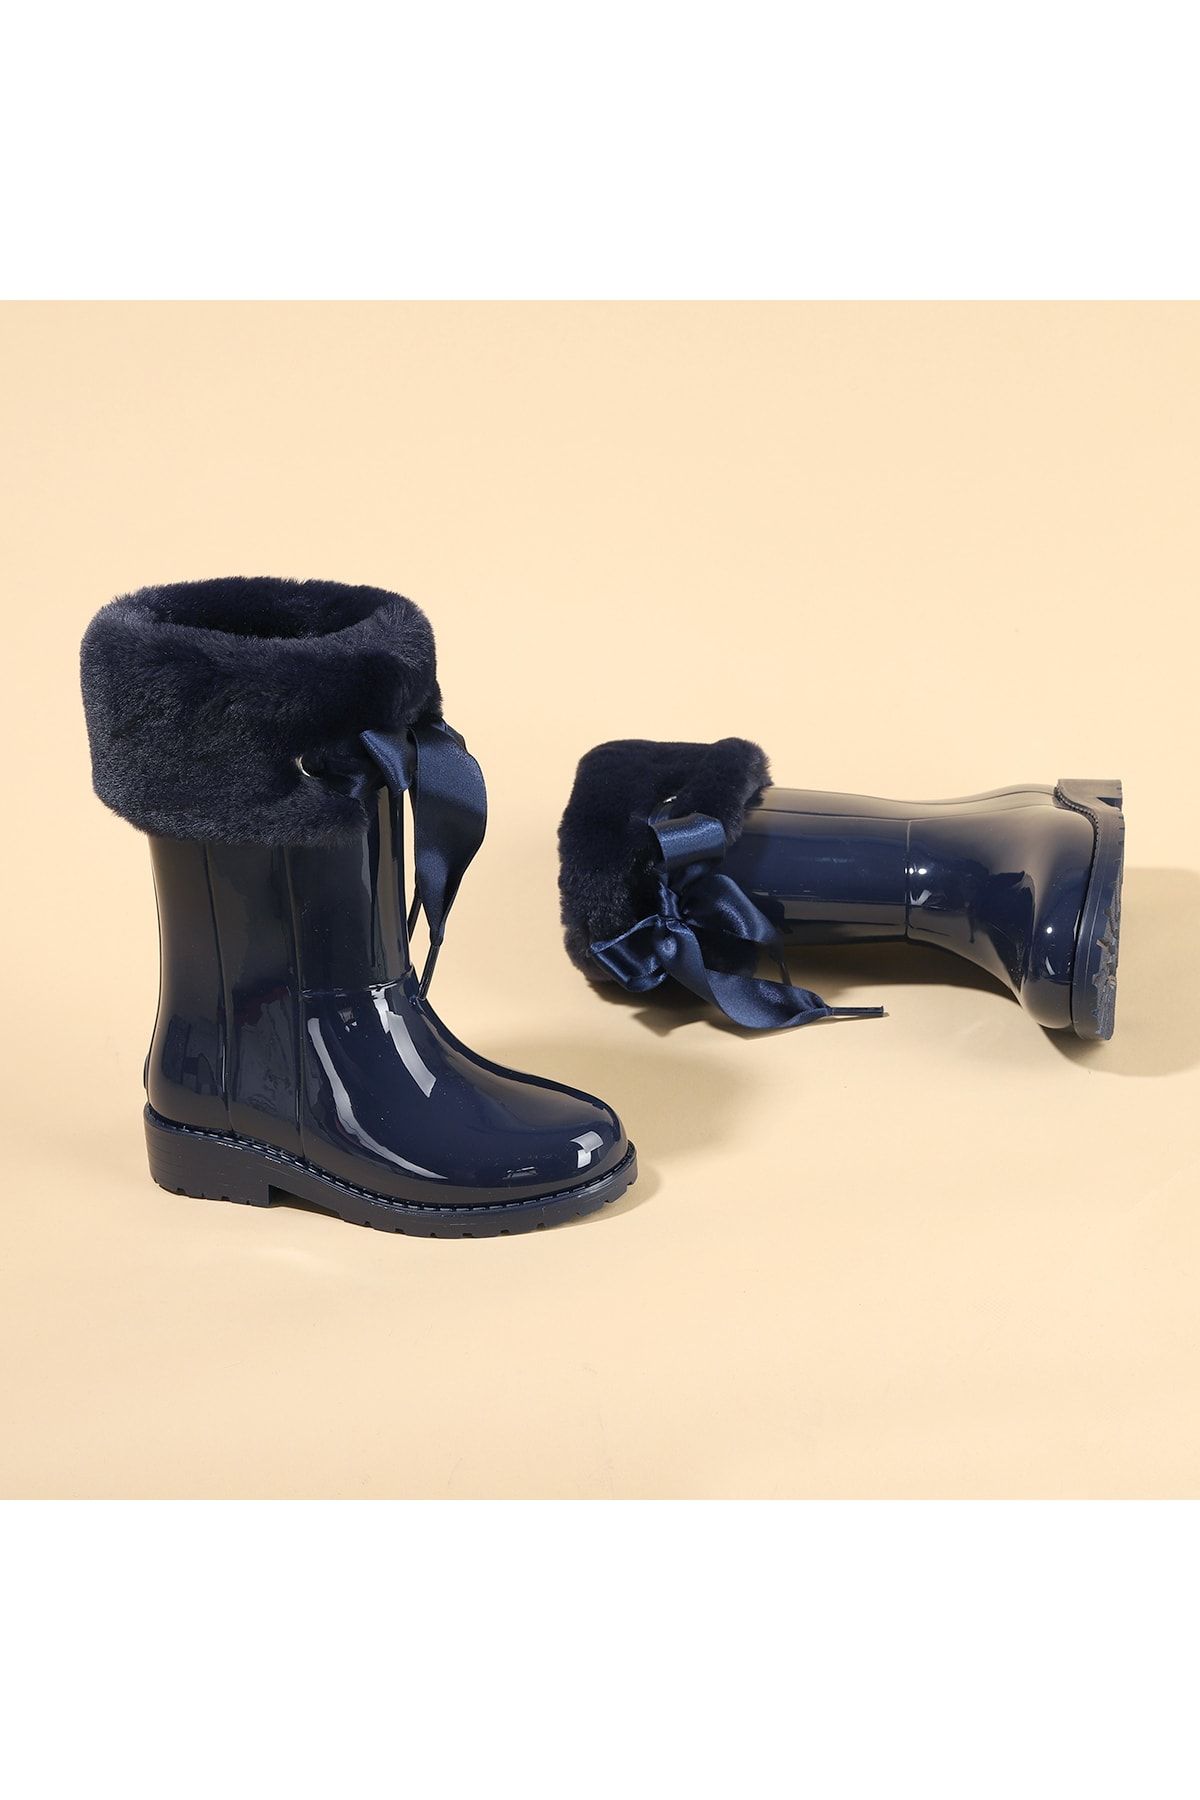 IGOR W10239 Campera Charol Soft Çocuk Lacivert Yağmur Çizmesi